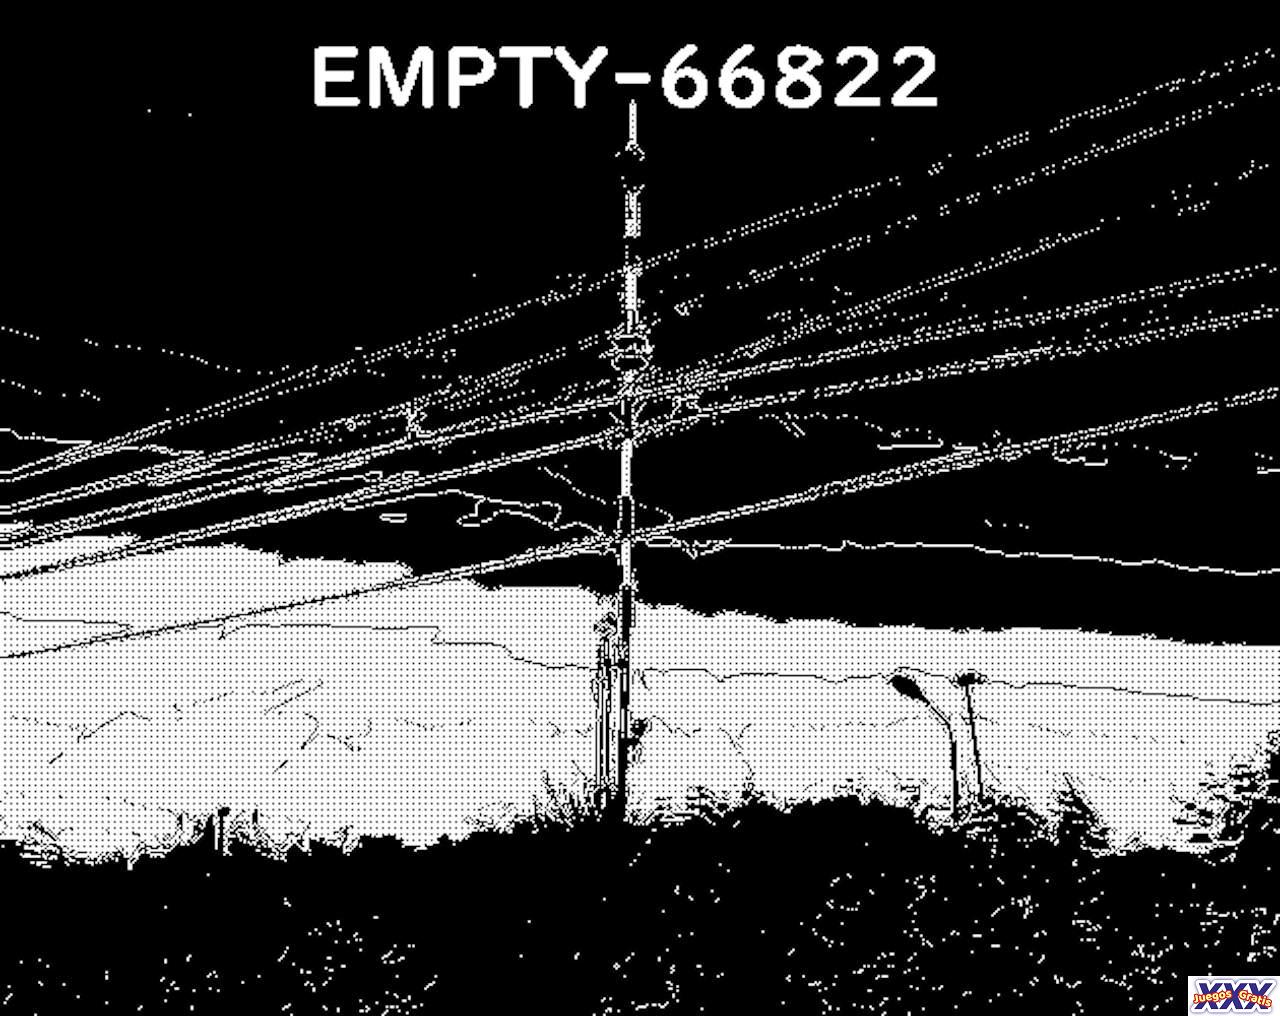 EMPTY-66822 [LONERY-MOON] [FINAL VERSION]